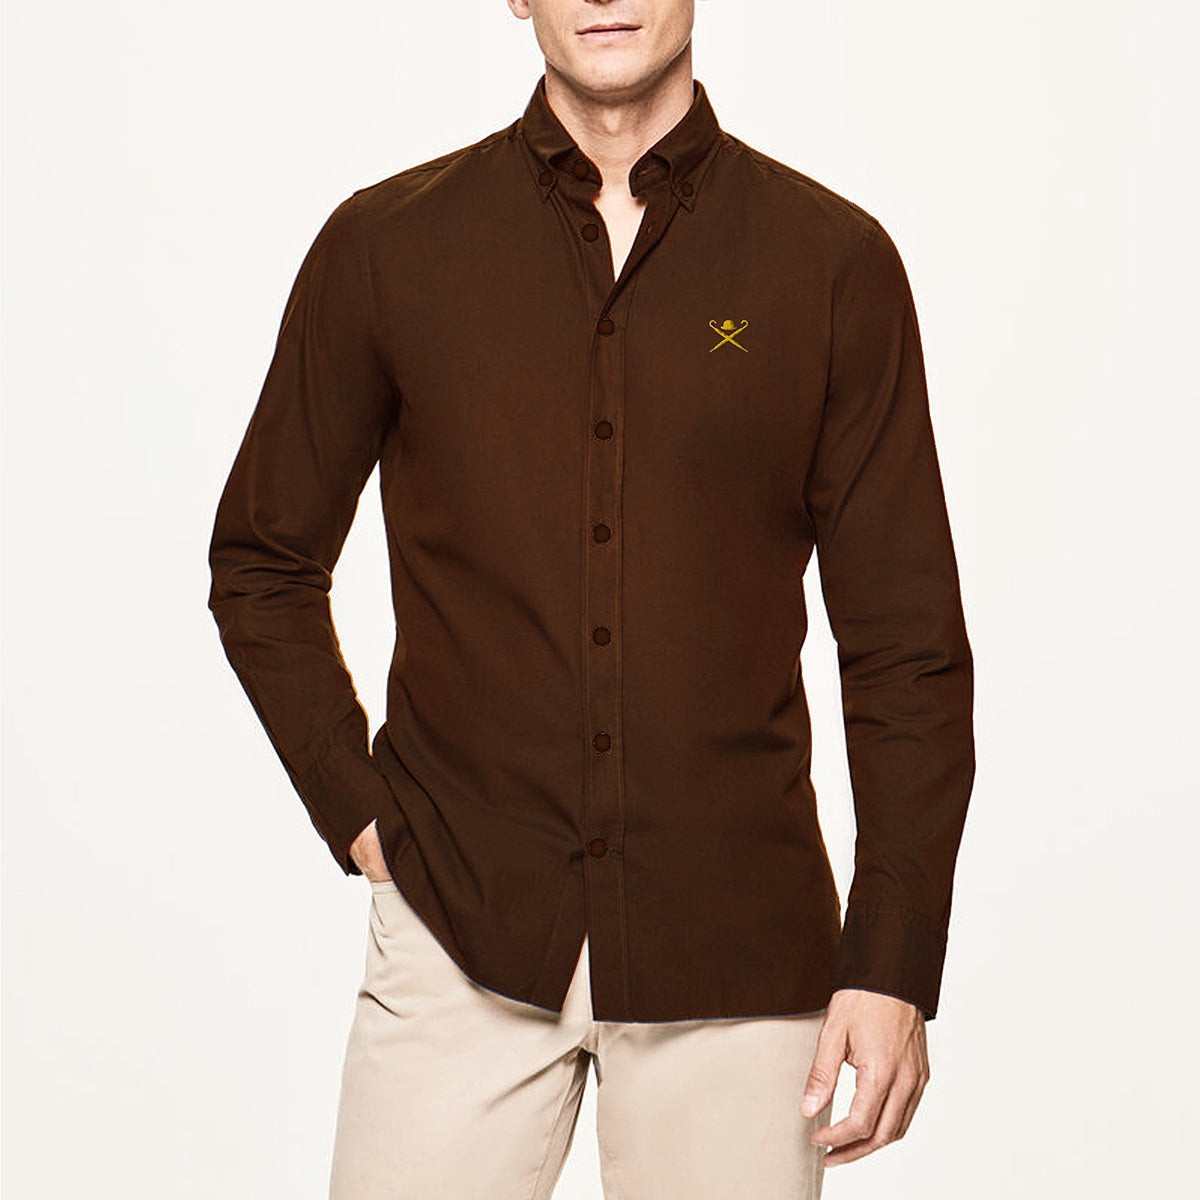 HKT-ASTN brown emb oxford shirt (00156)